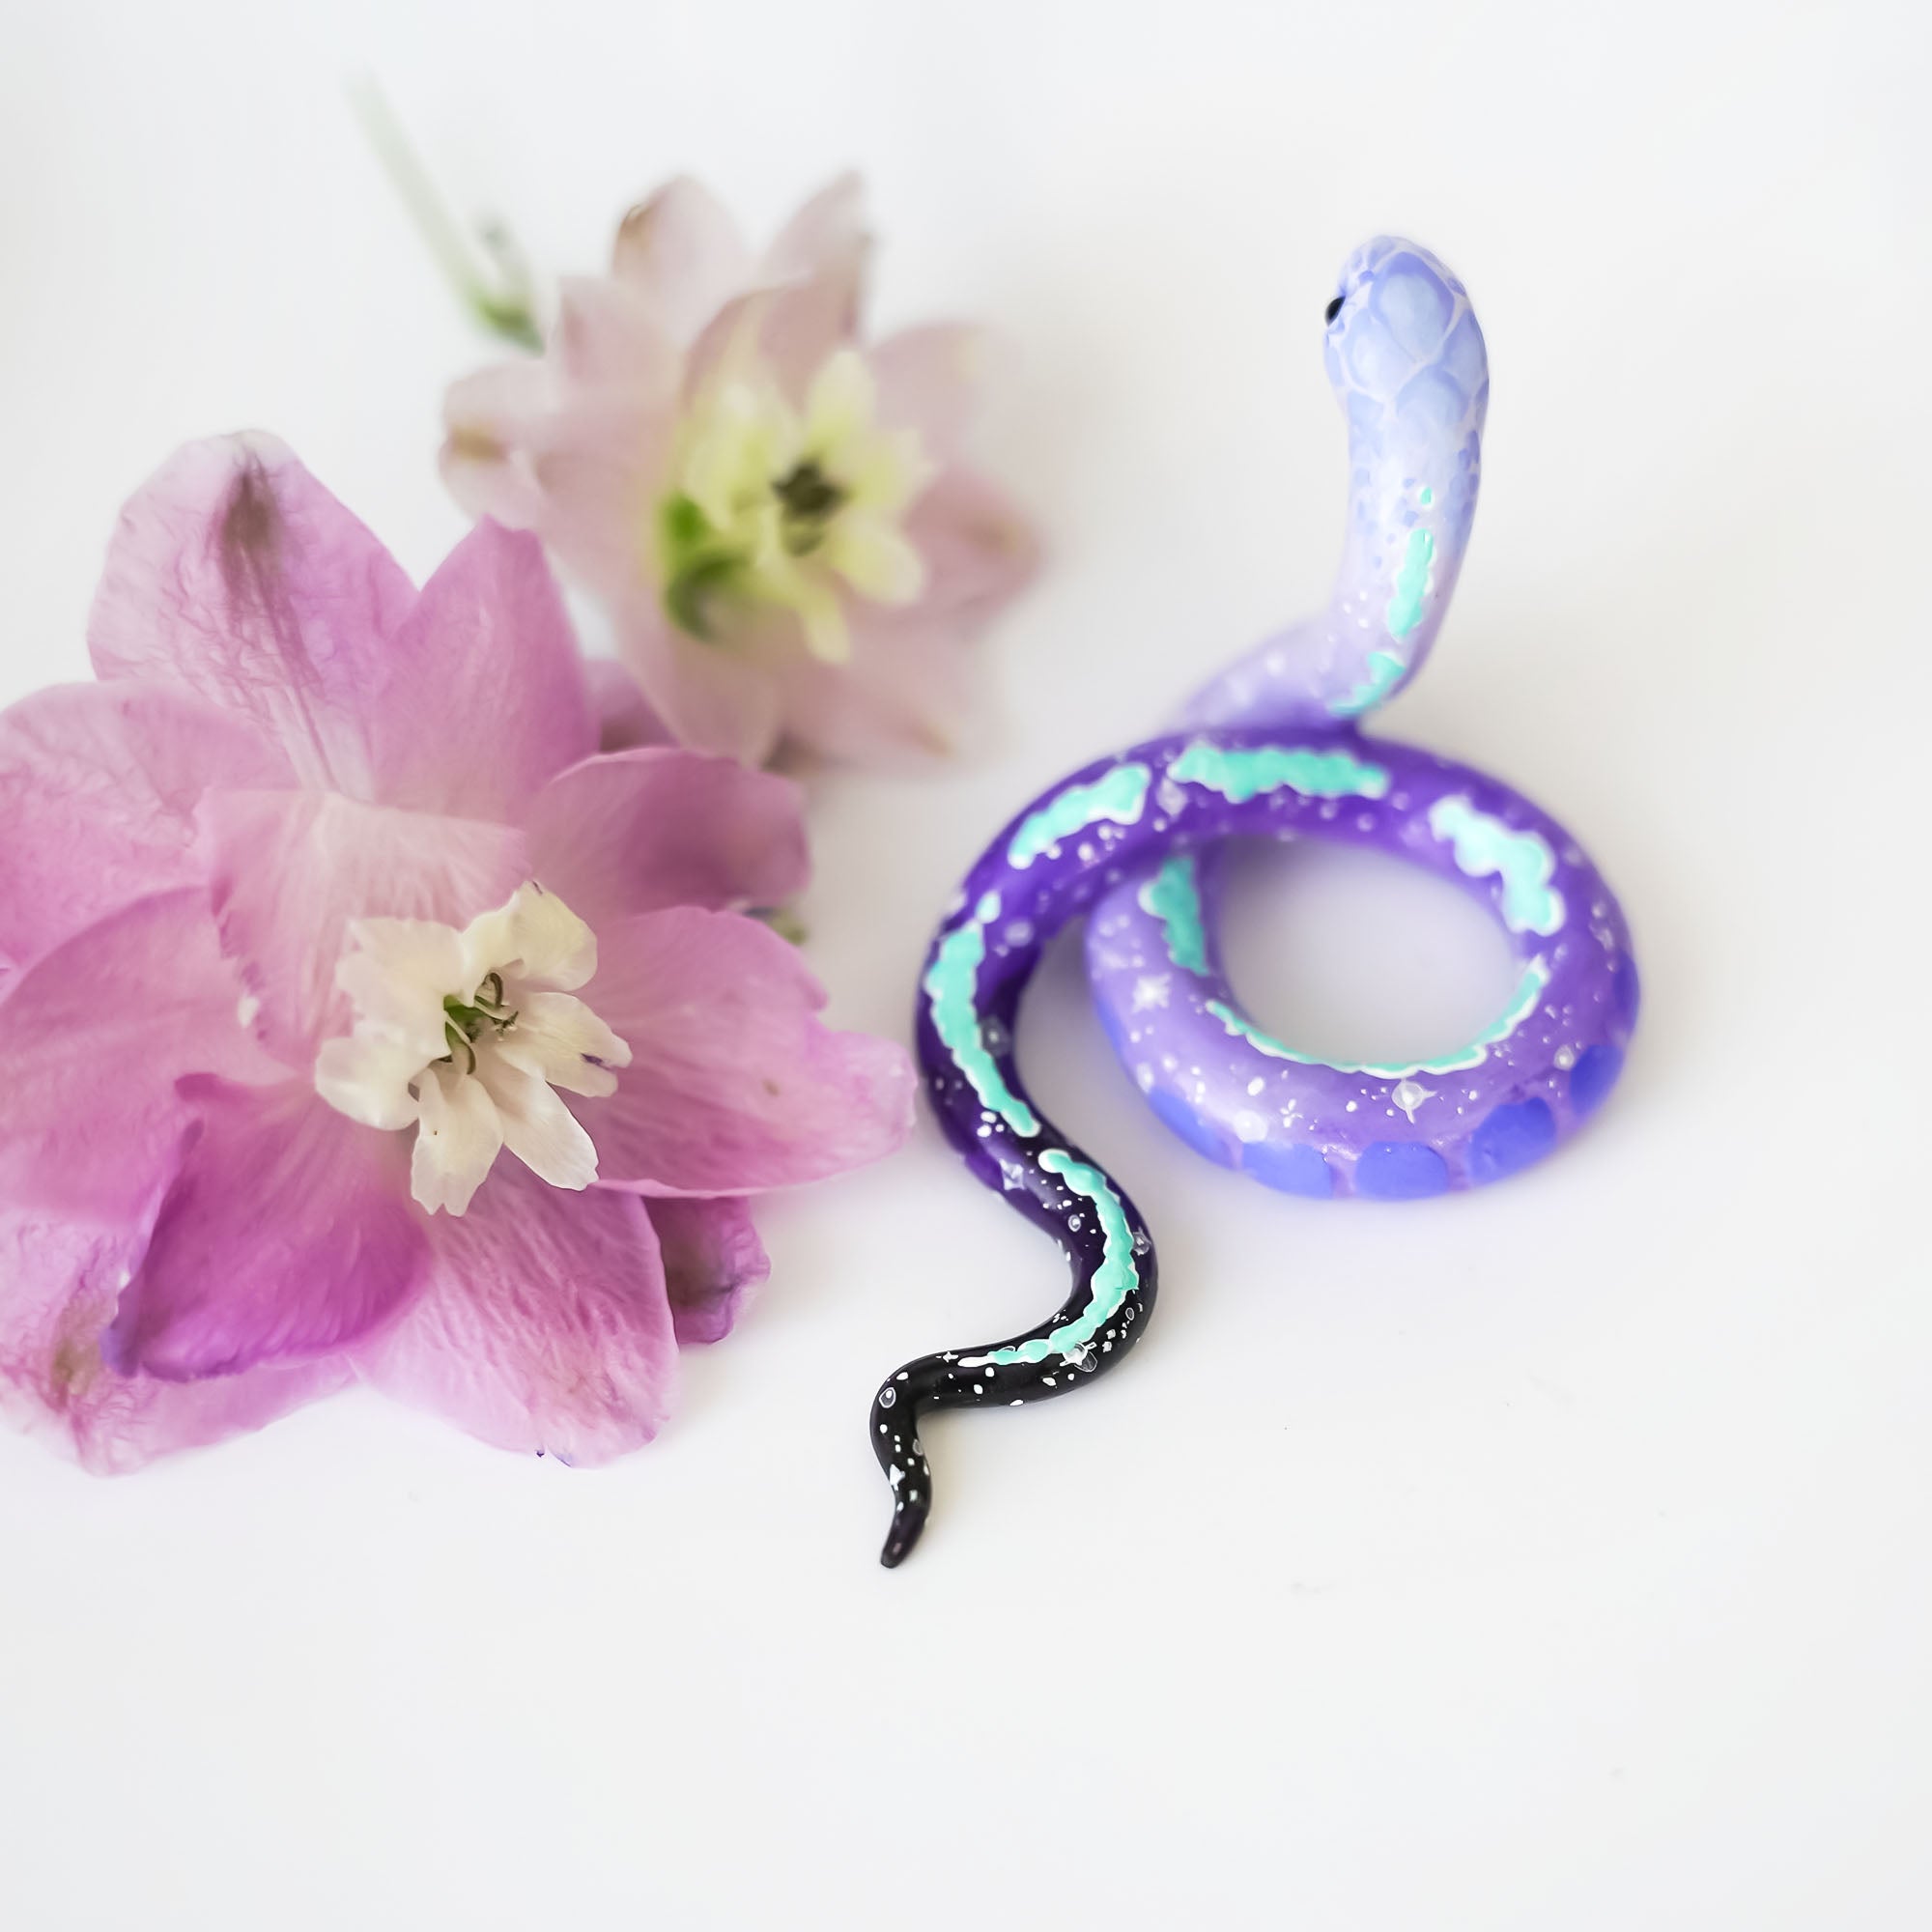 Lilac snake with stars figurine